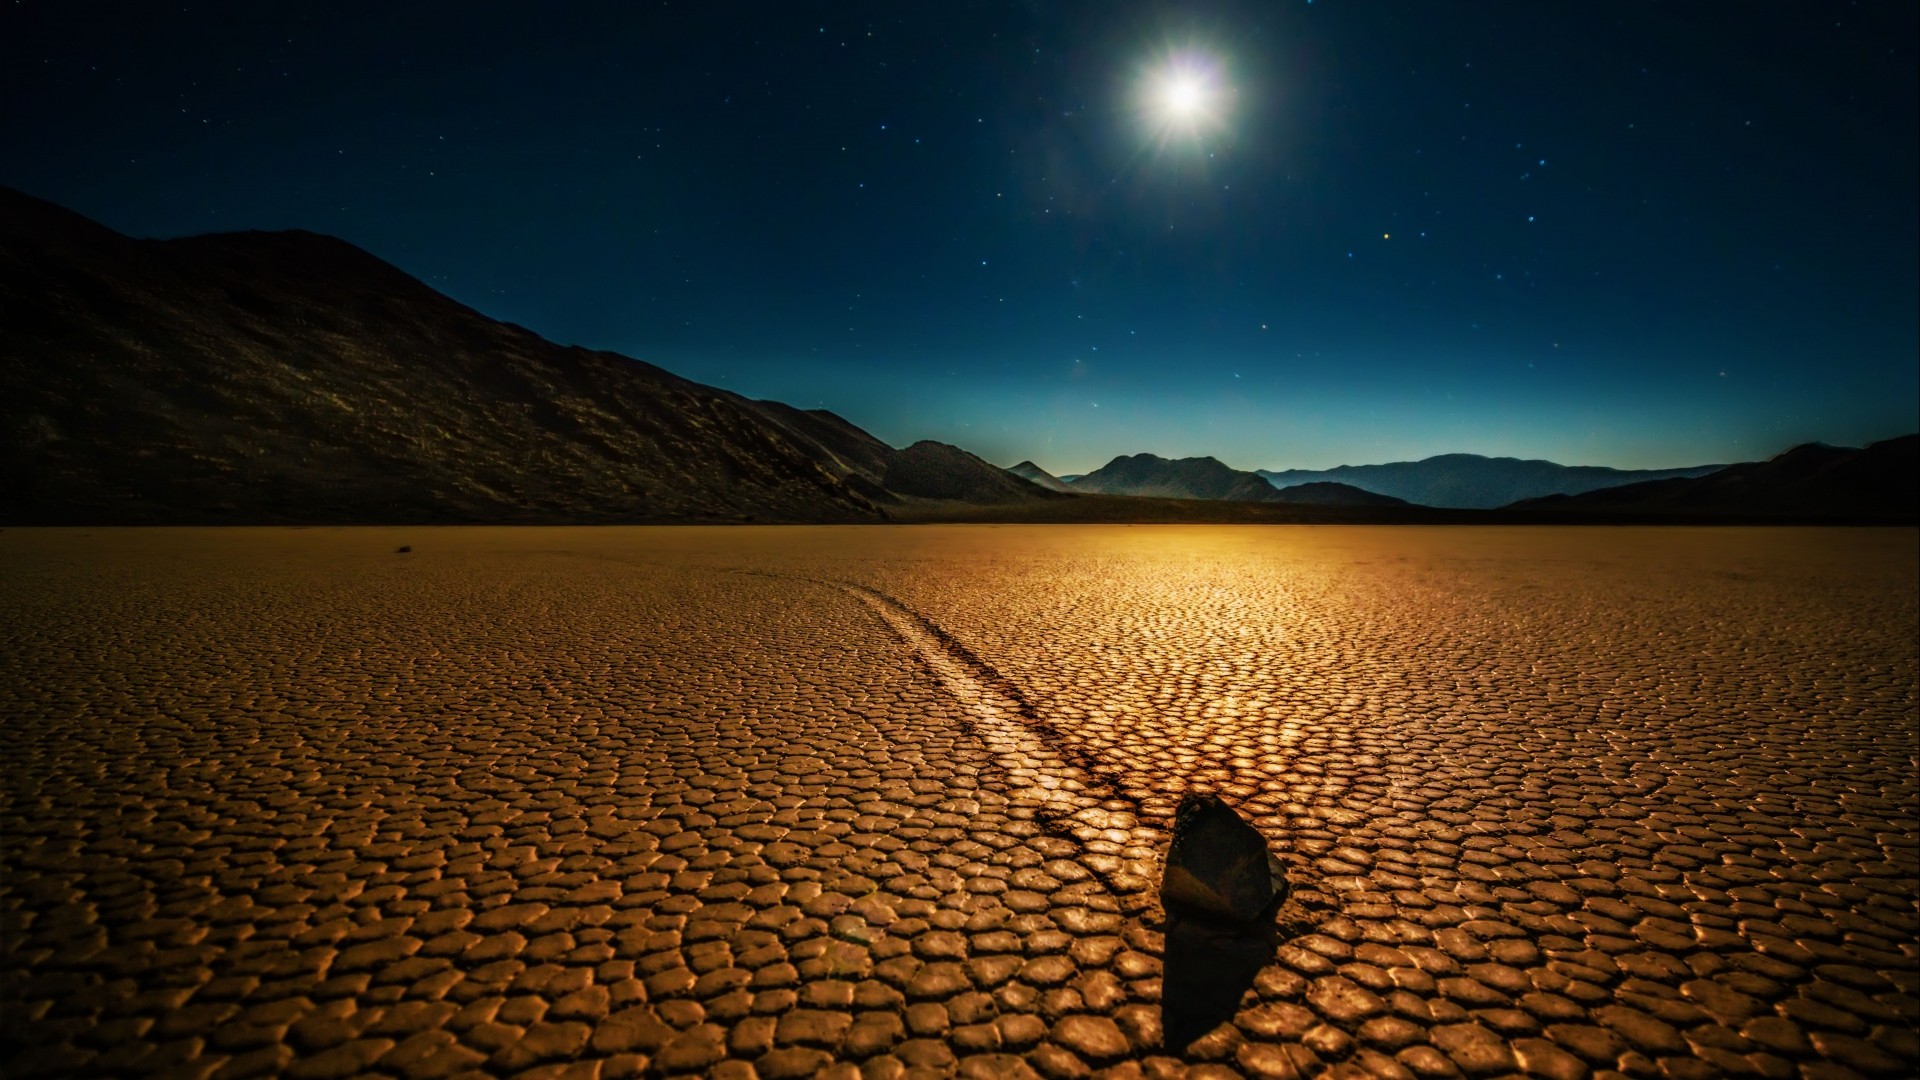 Nature Landscape Night Moon Moonlight Mountains Death Valley California USA Desert Valley Rock Stars 1920x1080